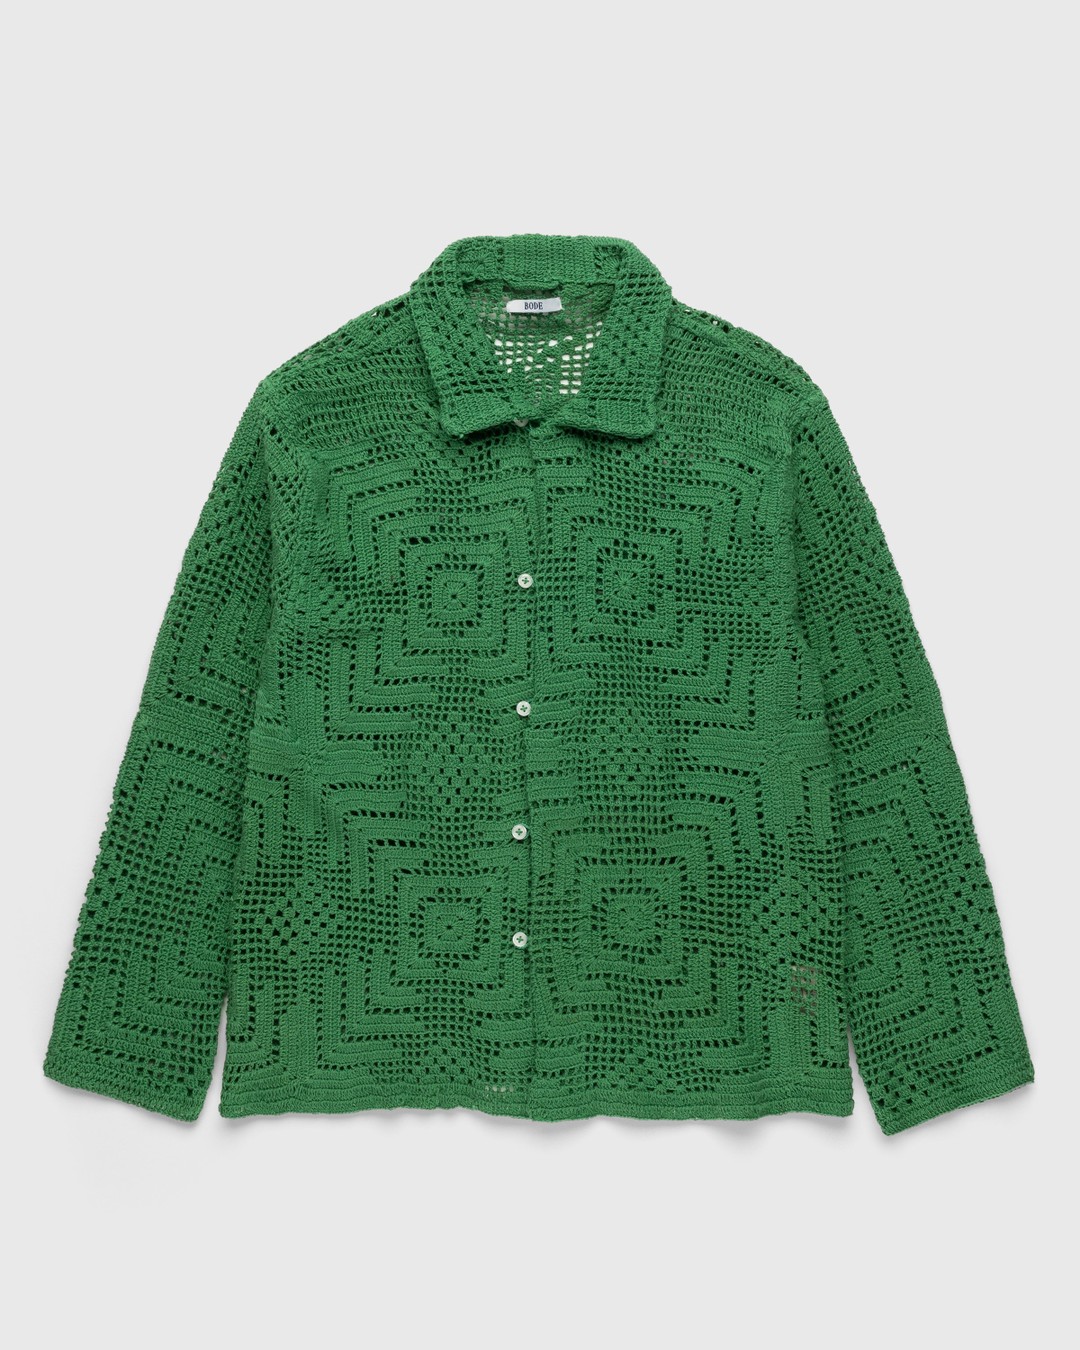 Bode – Crochet Overshirt Green - Overshirt - Green - Image 1